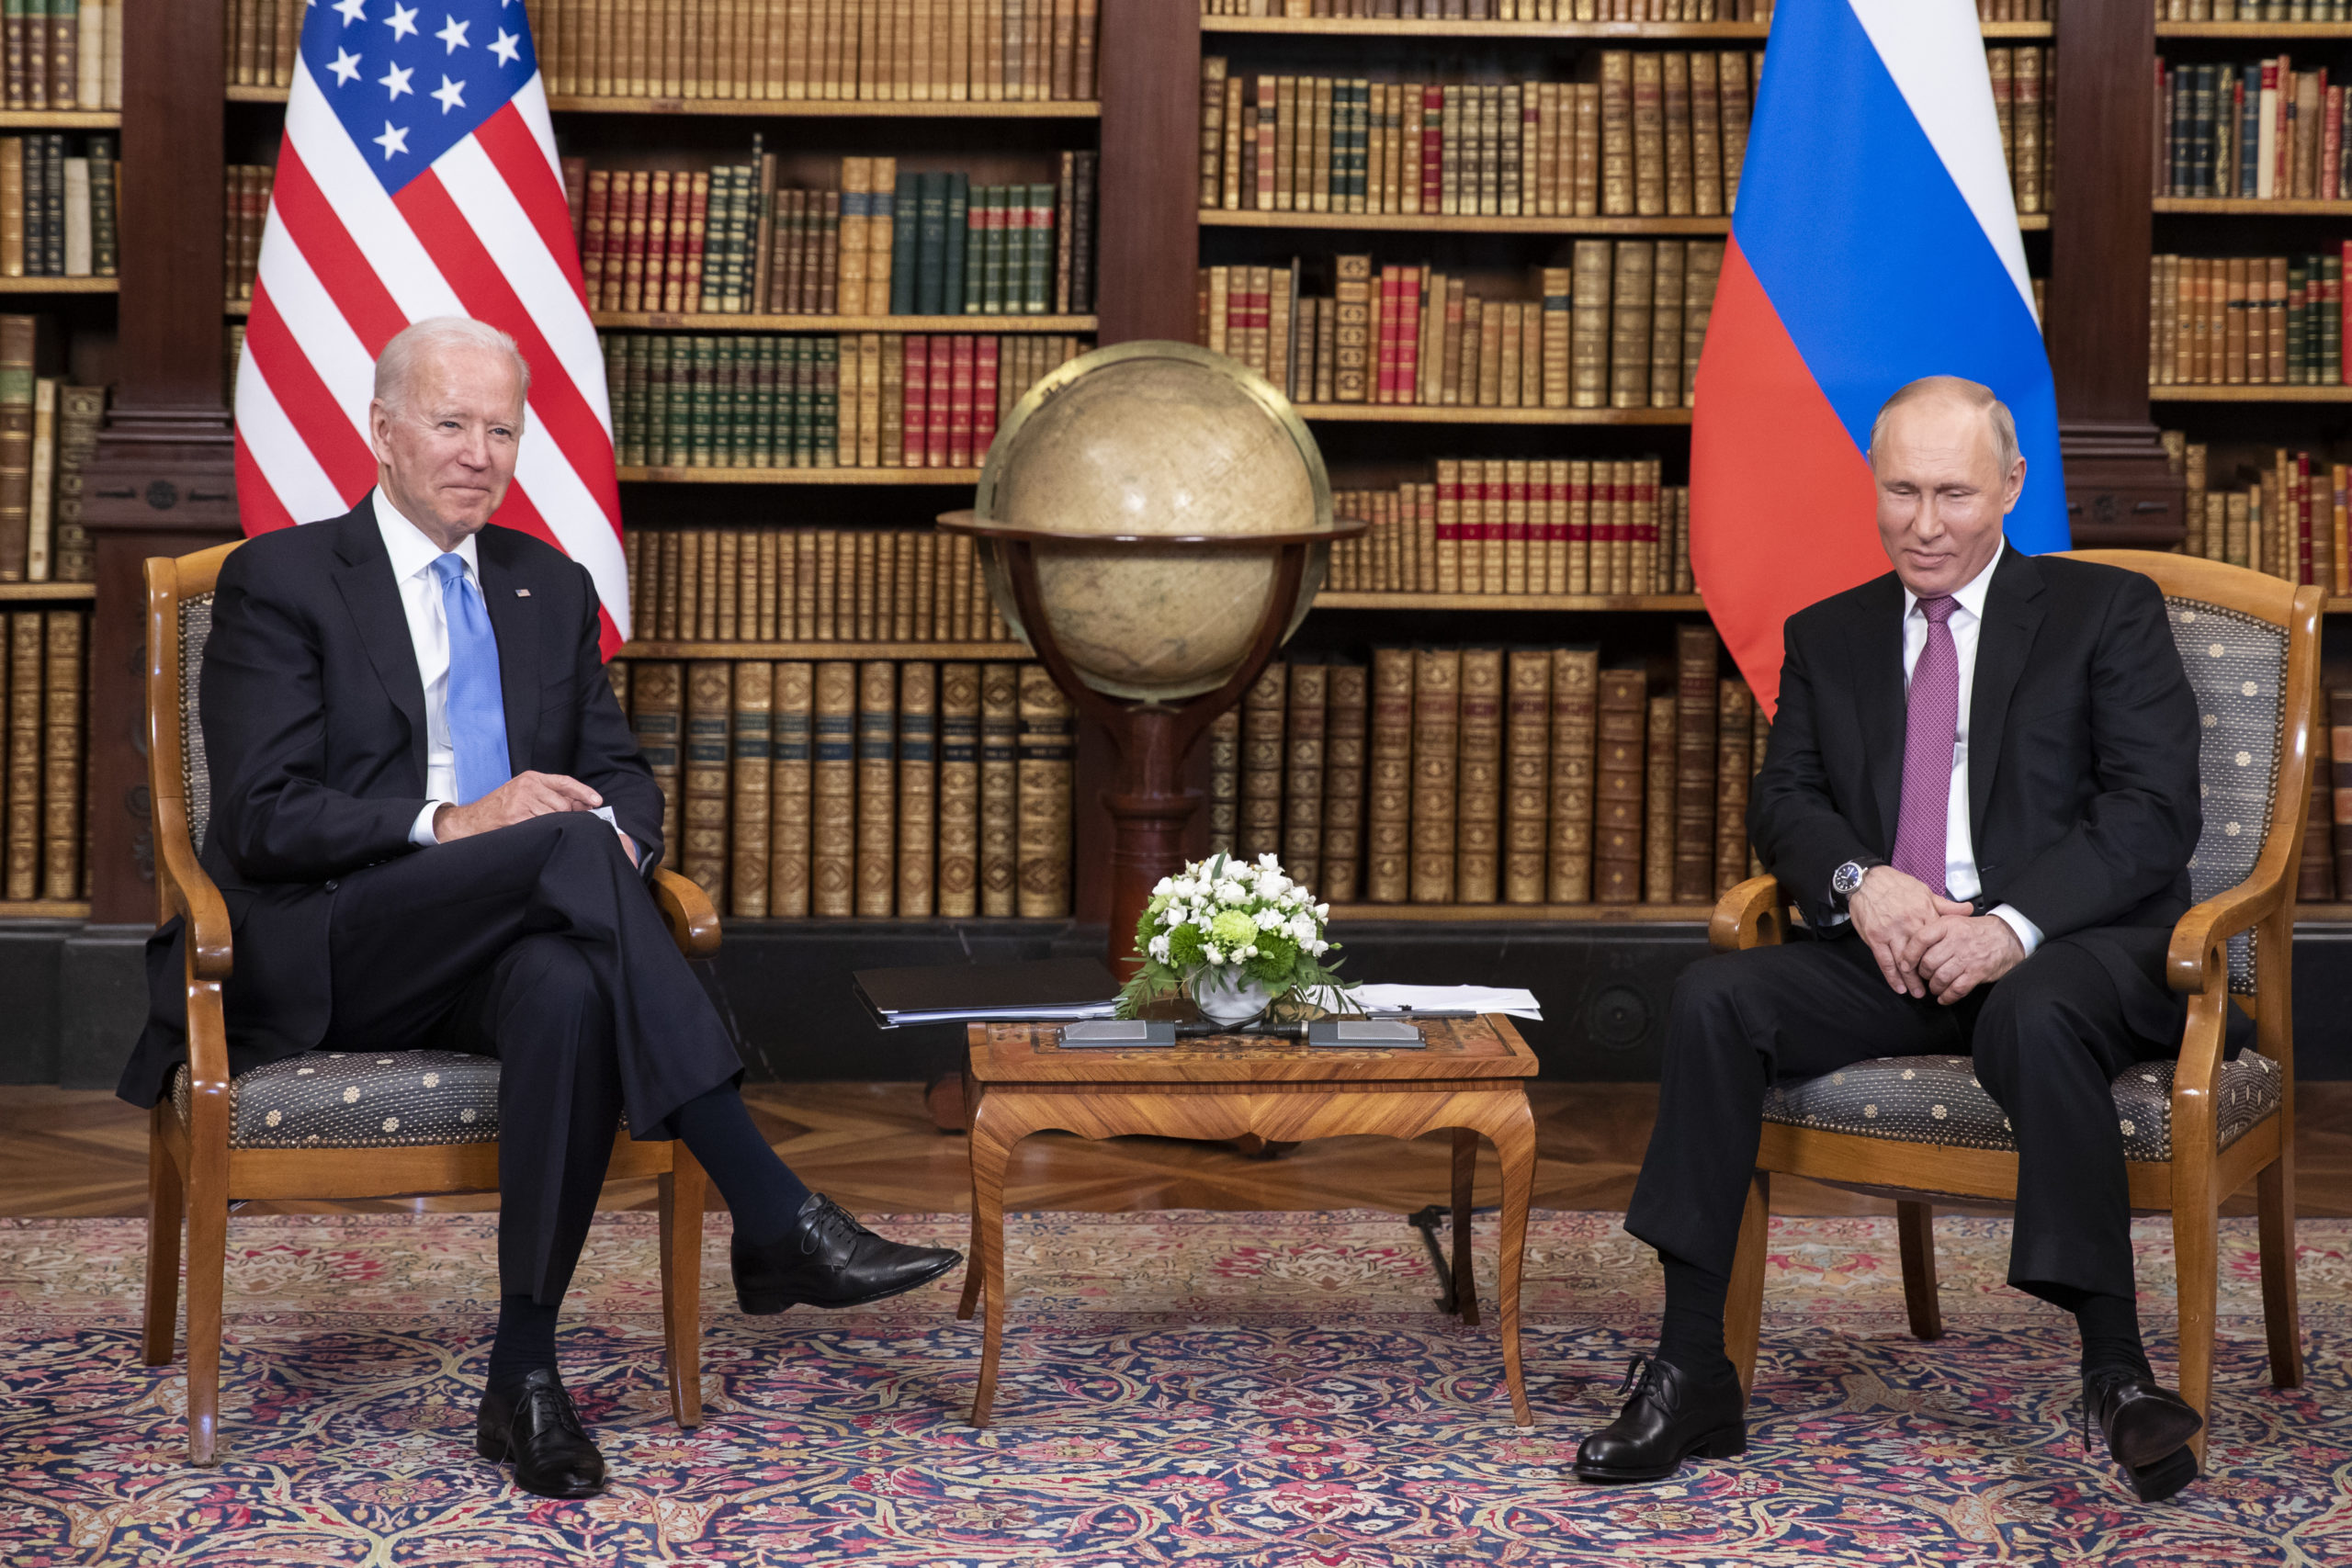 President Joe Biden and Russian President Vladimir Putin meet during a summit on June 16 in Geneva, Switzerland. (Peter Klaunzer/Pool/Keystone via Getty Images)